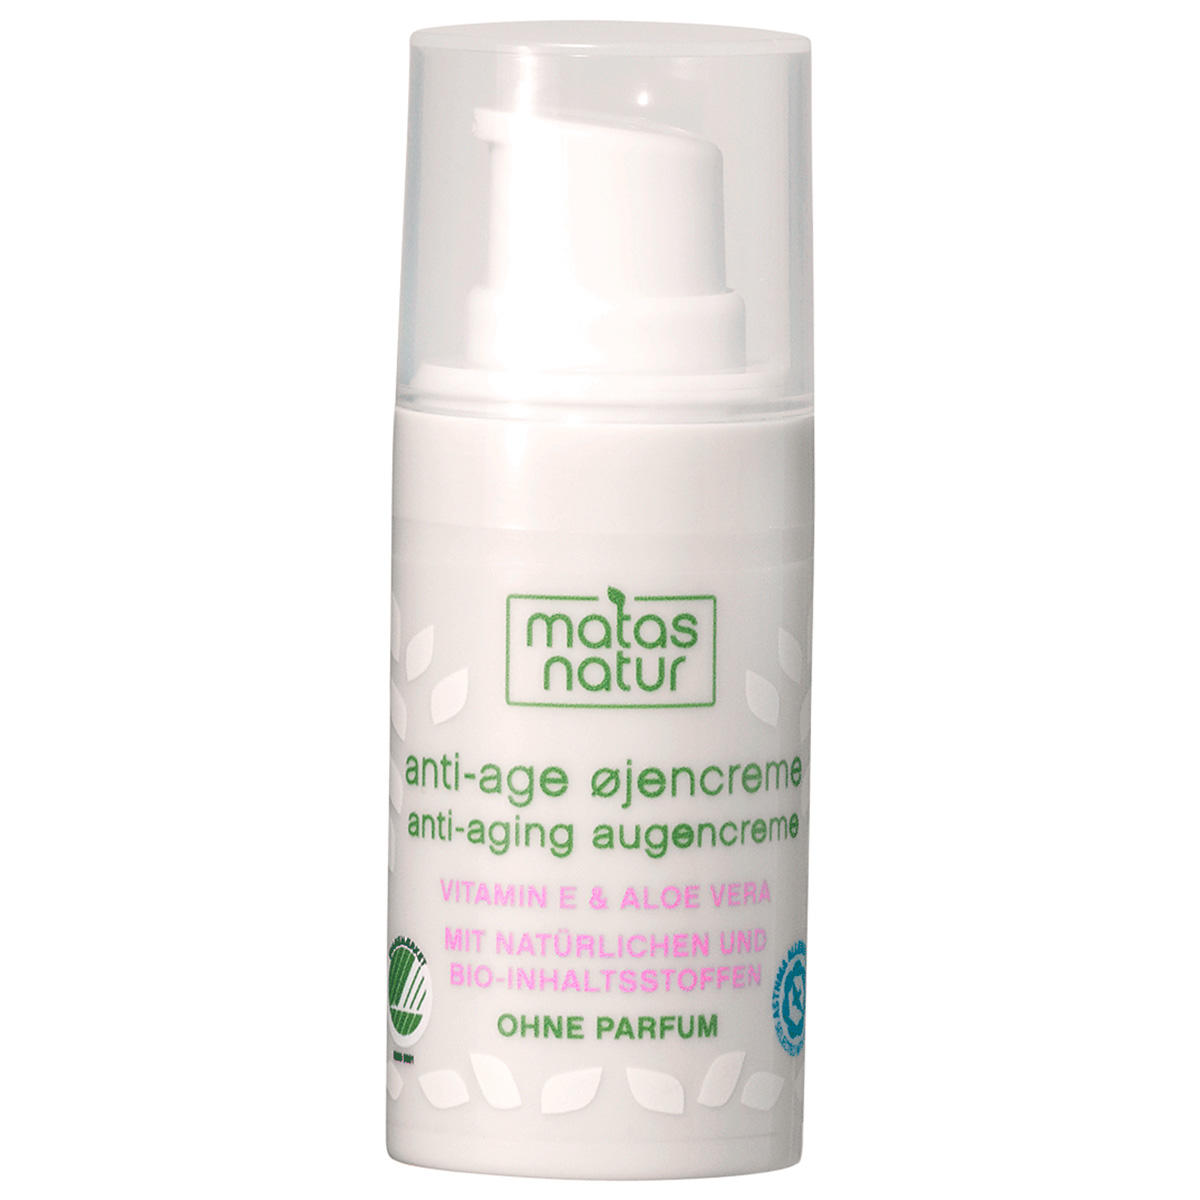 Anti-aging eye cream with organic aloe vera and vitamin E 15 ml - 1